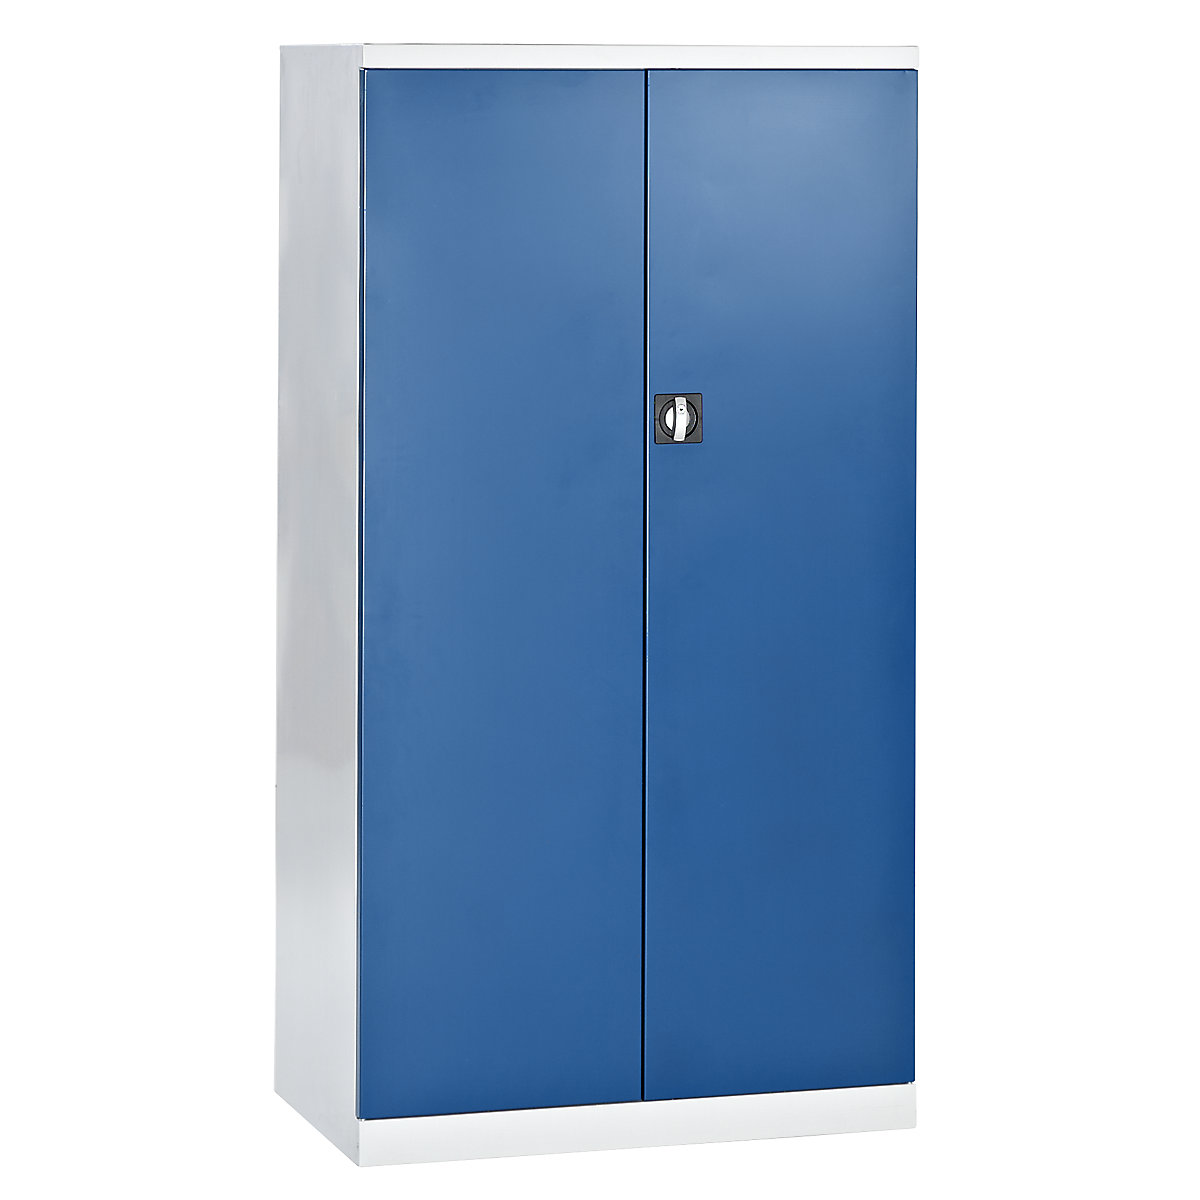 Empty tool cupboard housings, inside of doors with perforations, blue doors-6